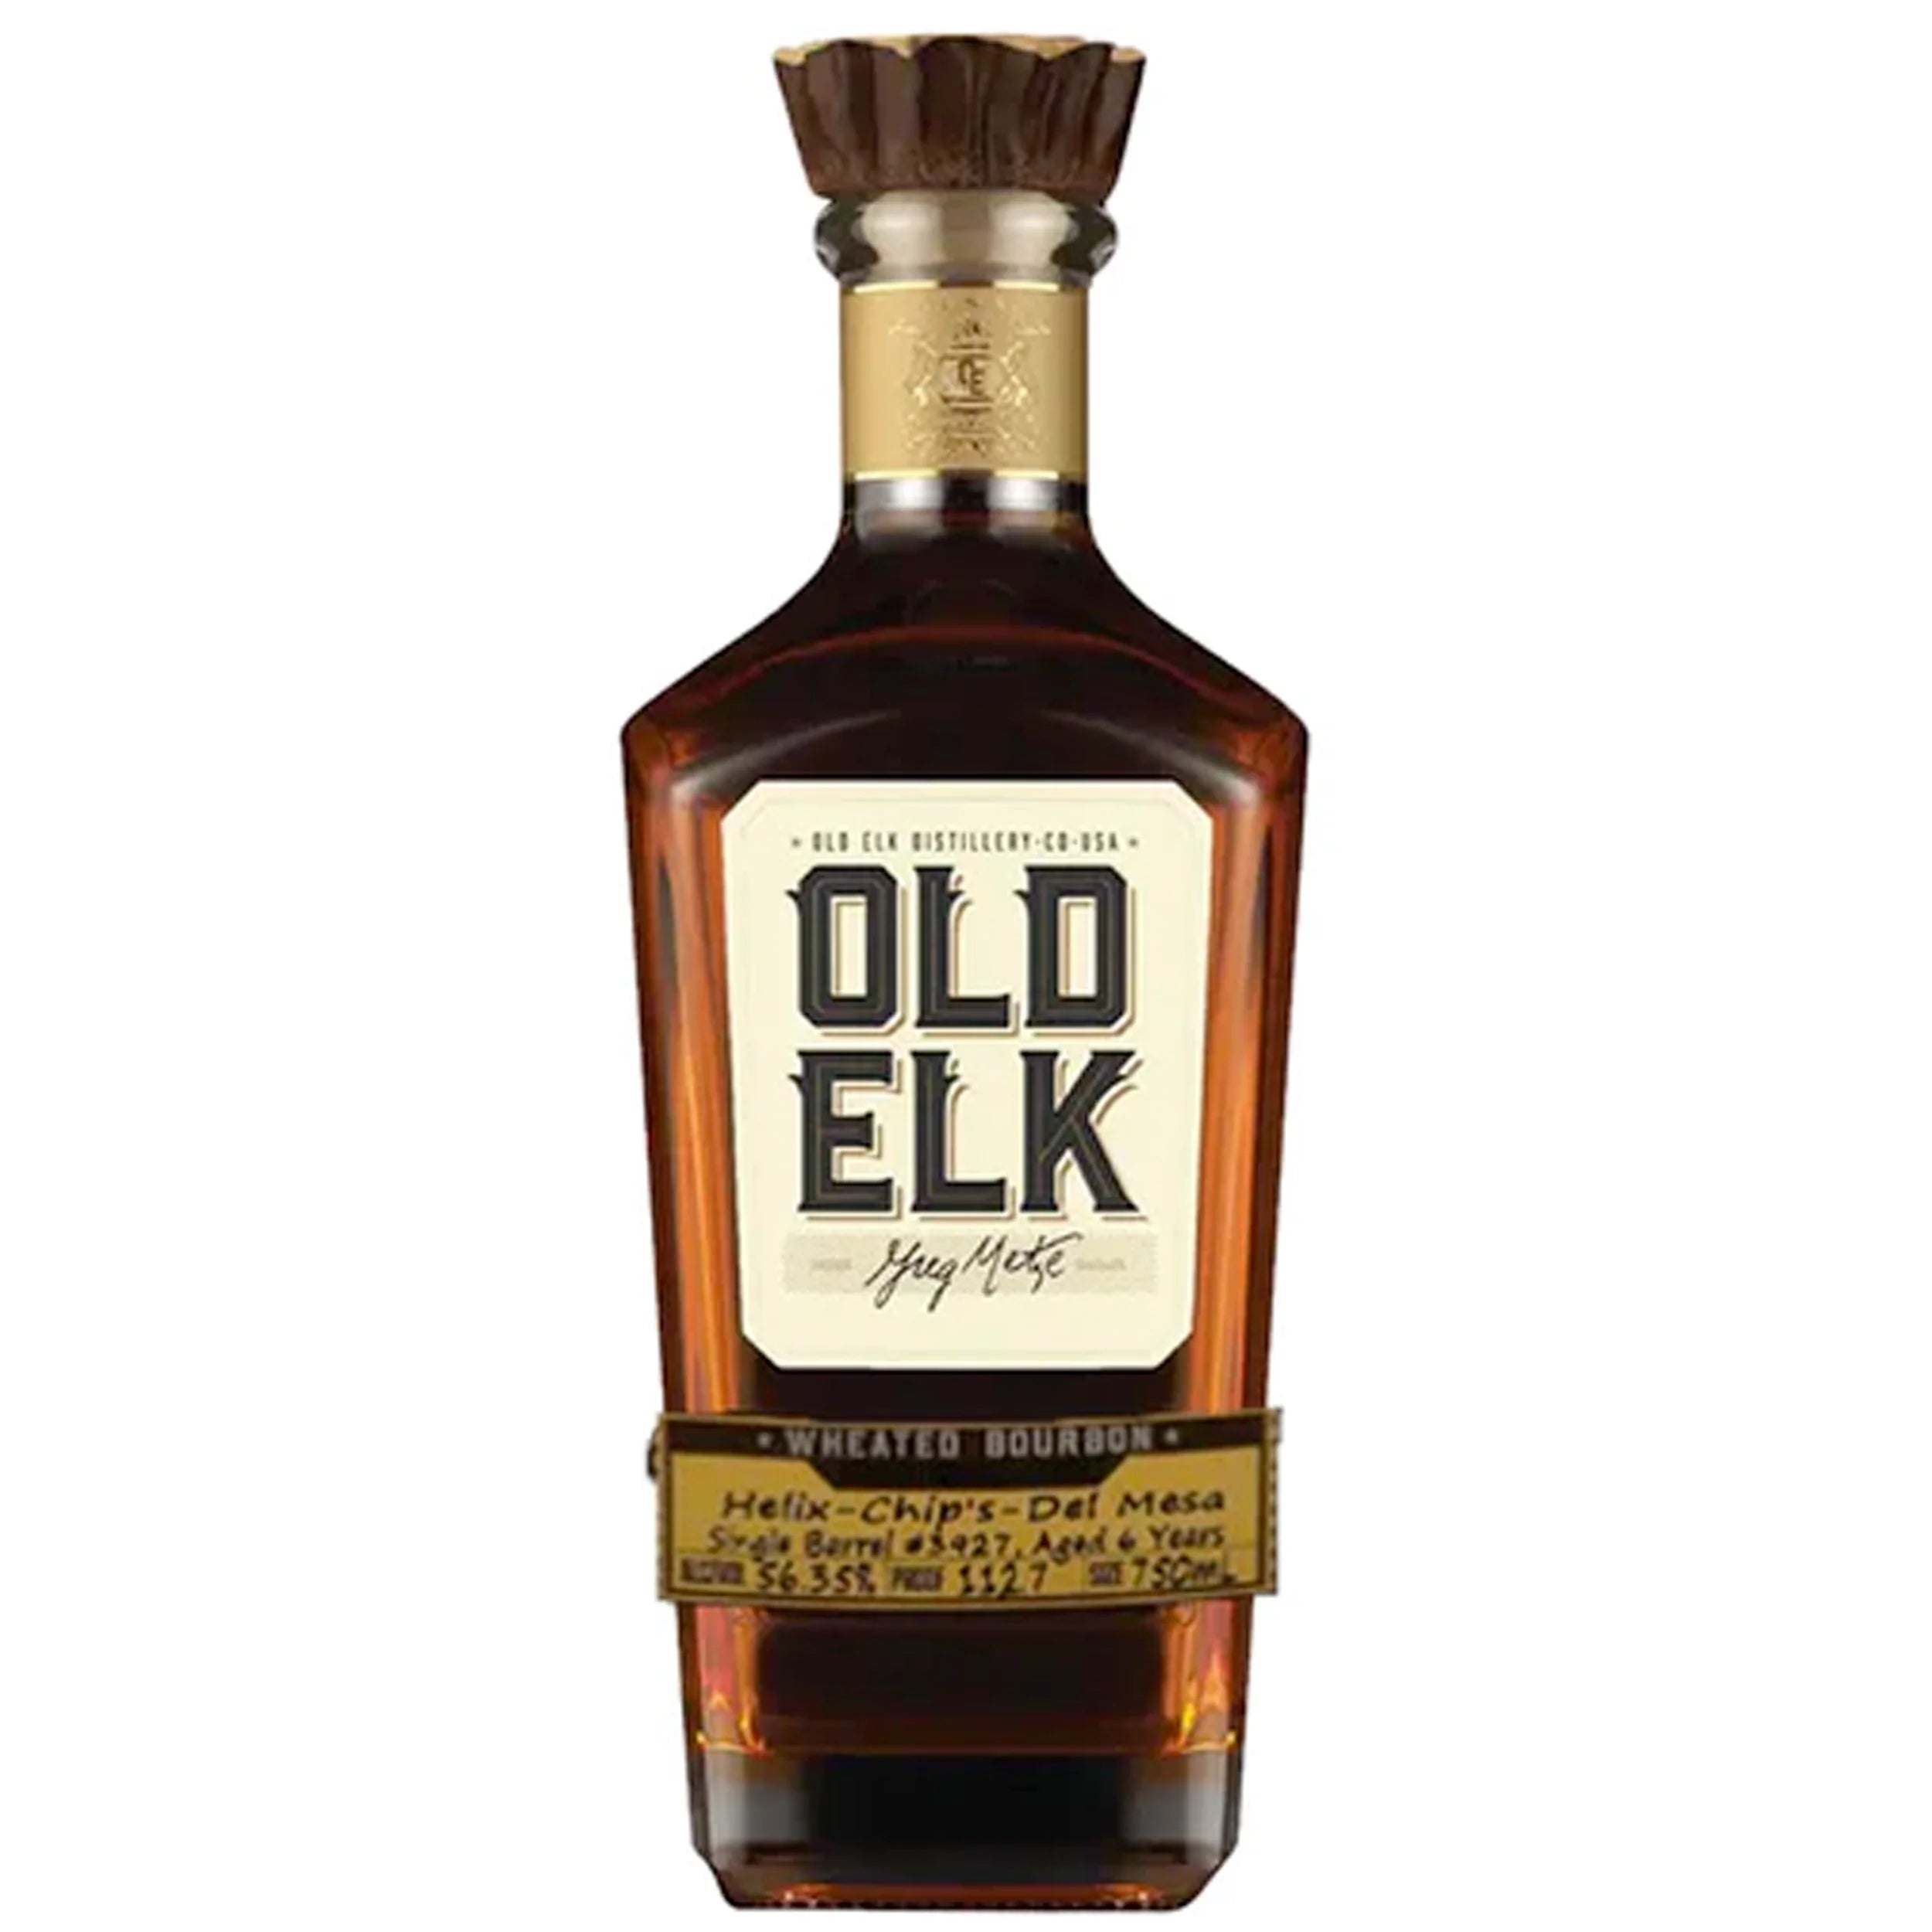 Old Elk 'Maverelk' Wheated Bourbon Whiskey Barrel Pick Single Barrel #3927